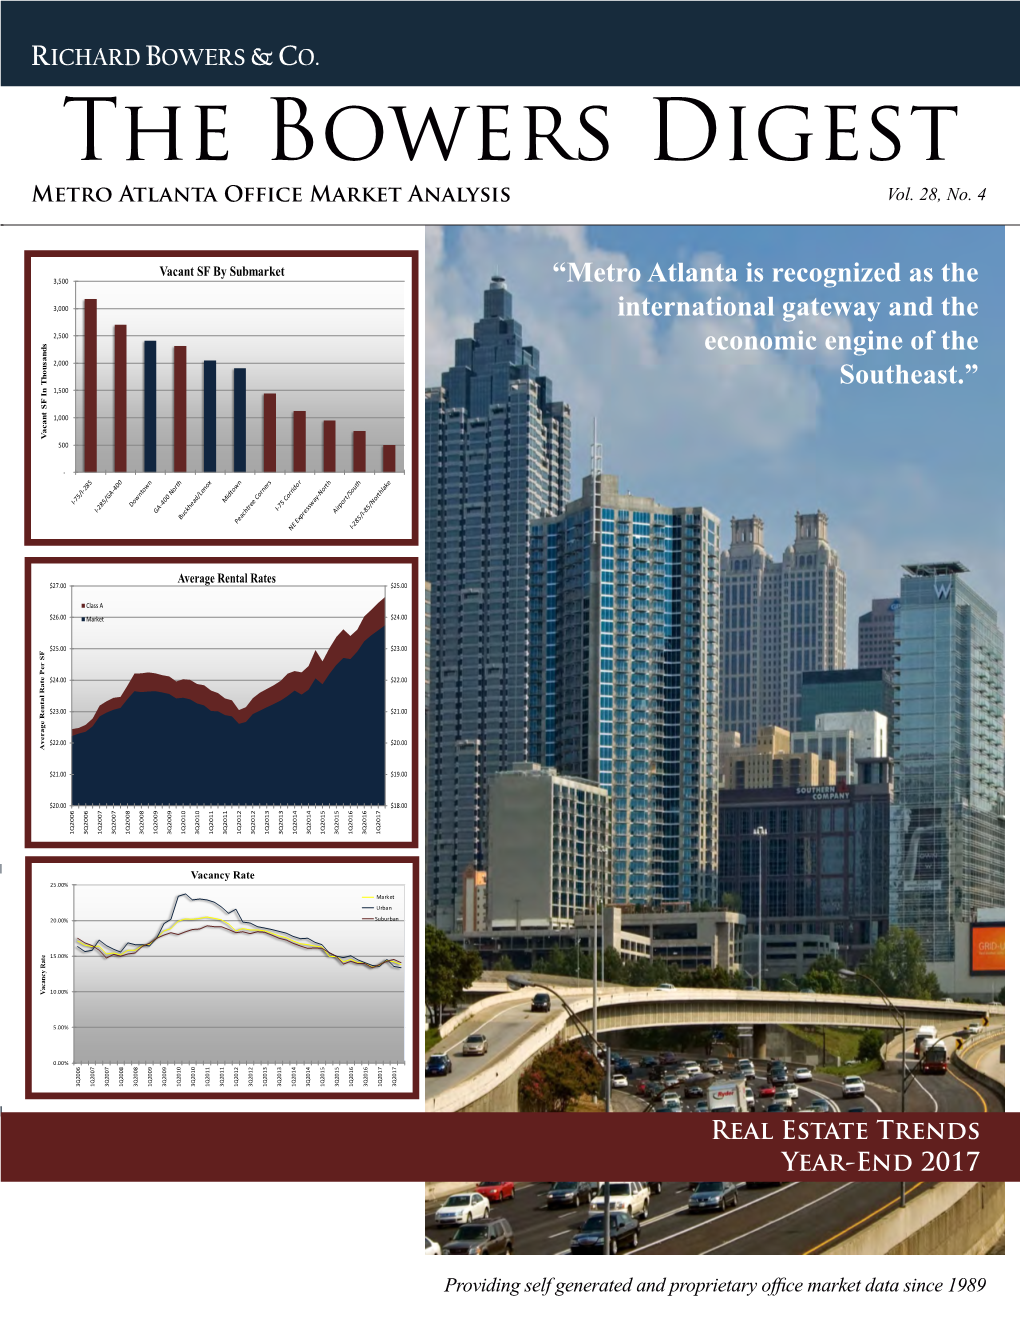 The Bowers Digest Metro Atlanta Office Market Analysis Vol